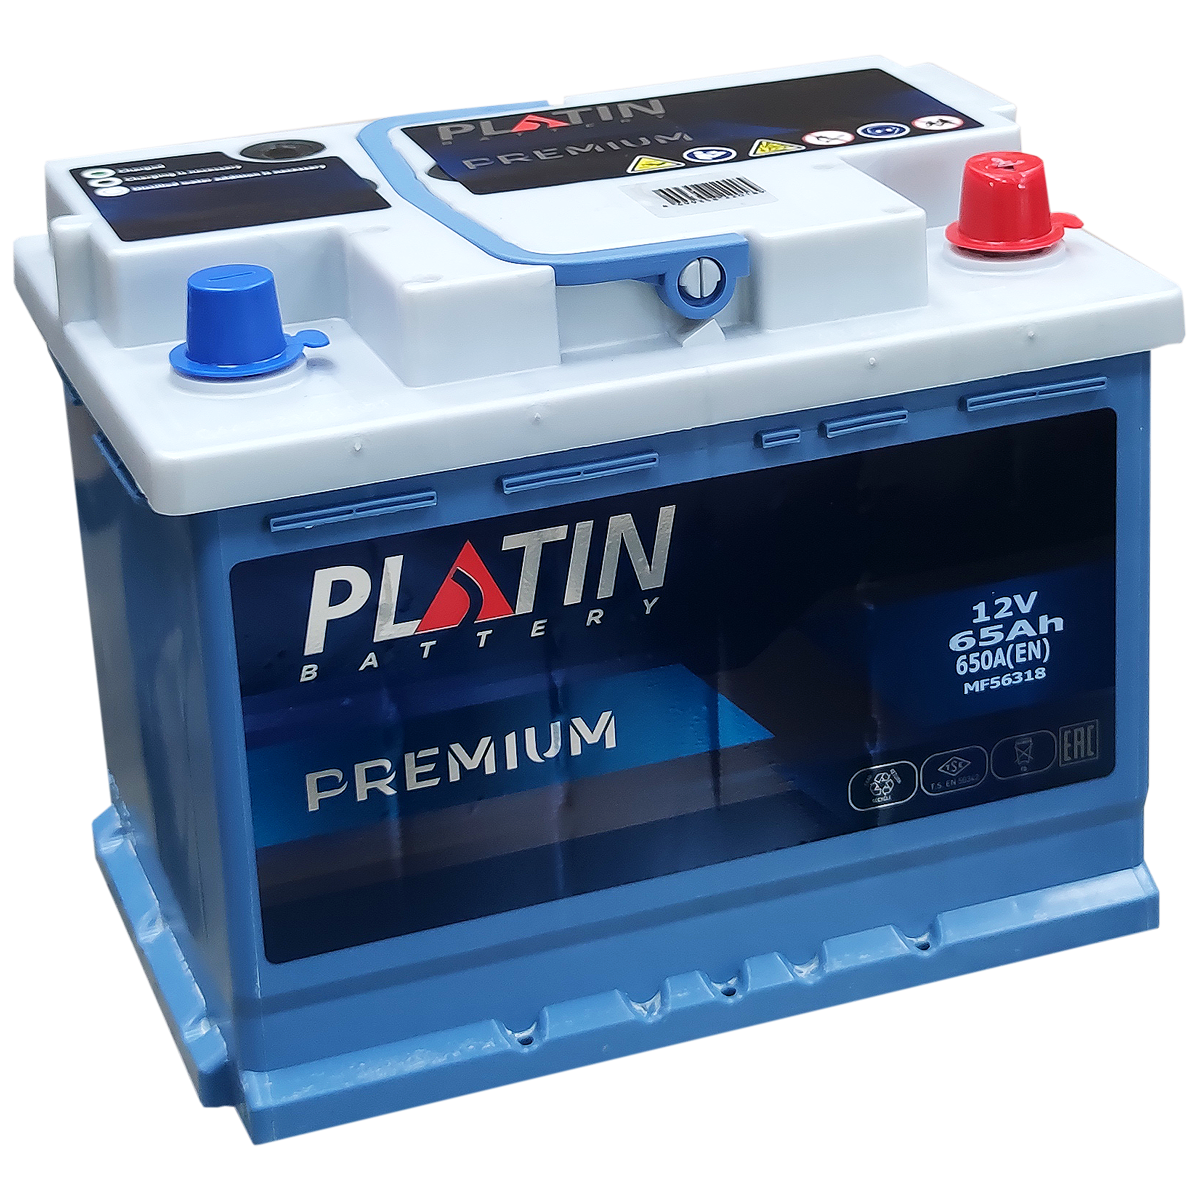 Battery 65. Platin Premium 65 Ач. Аккумулятор Platin 65 Ah. Platin Premium 60 Ah аккумулятор. Аккумулятор 65 Ач Premium.